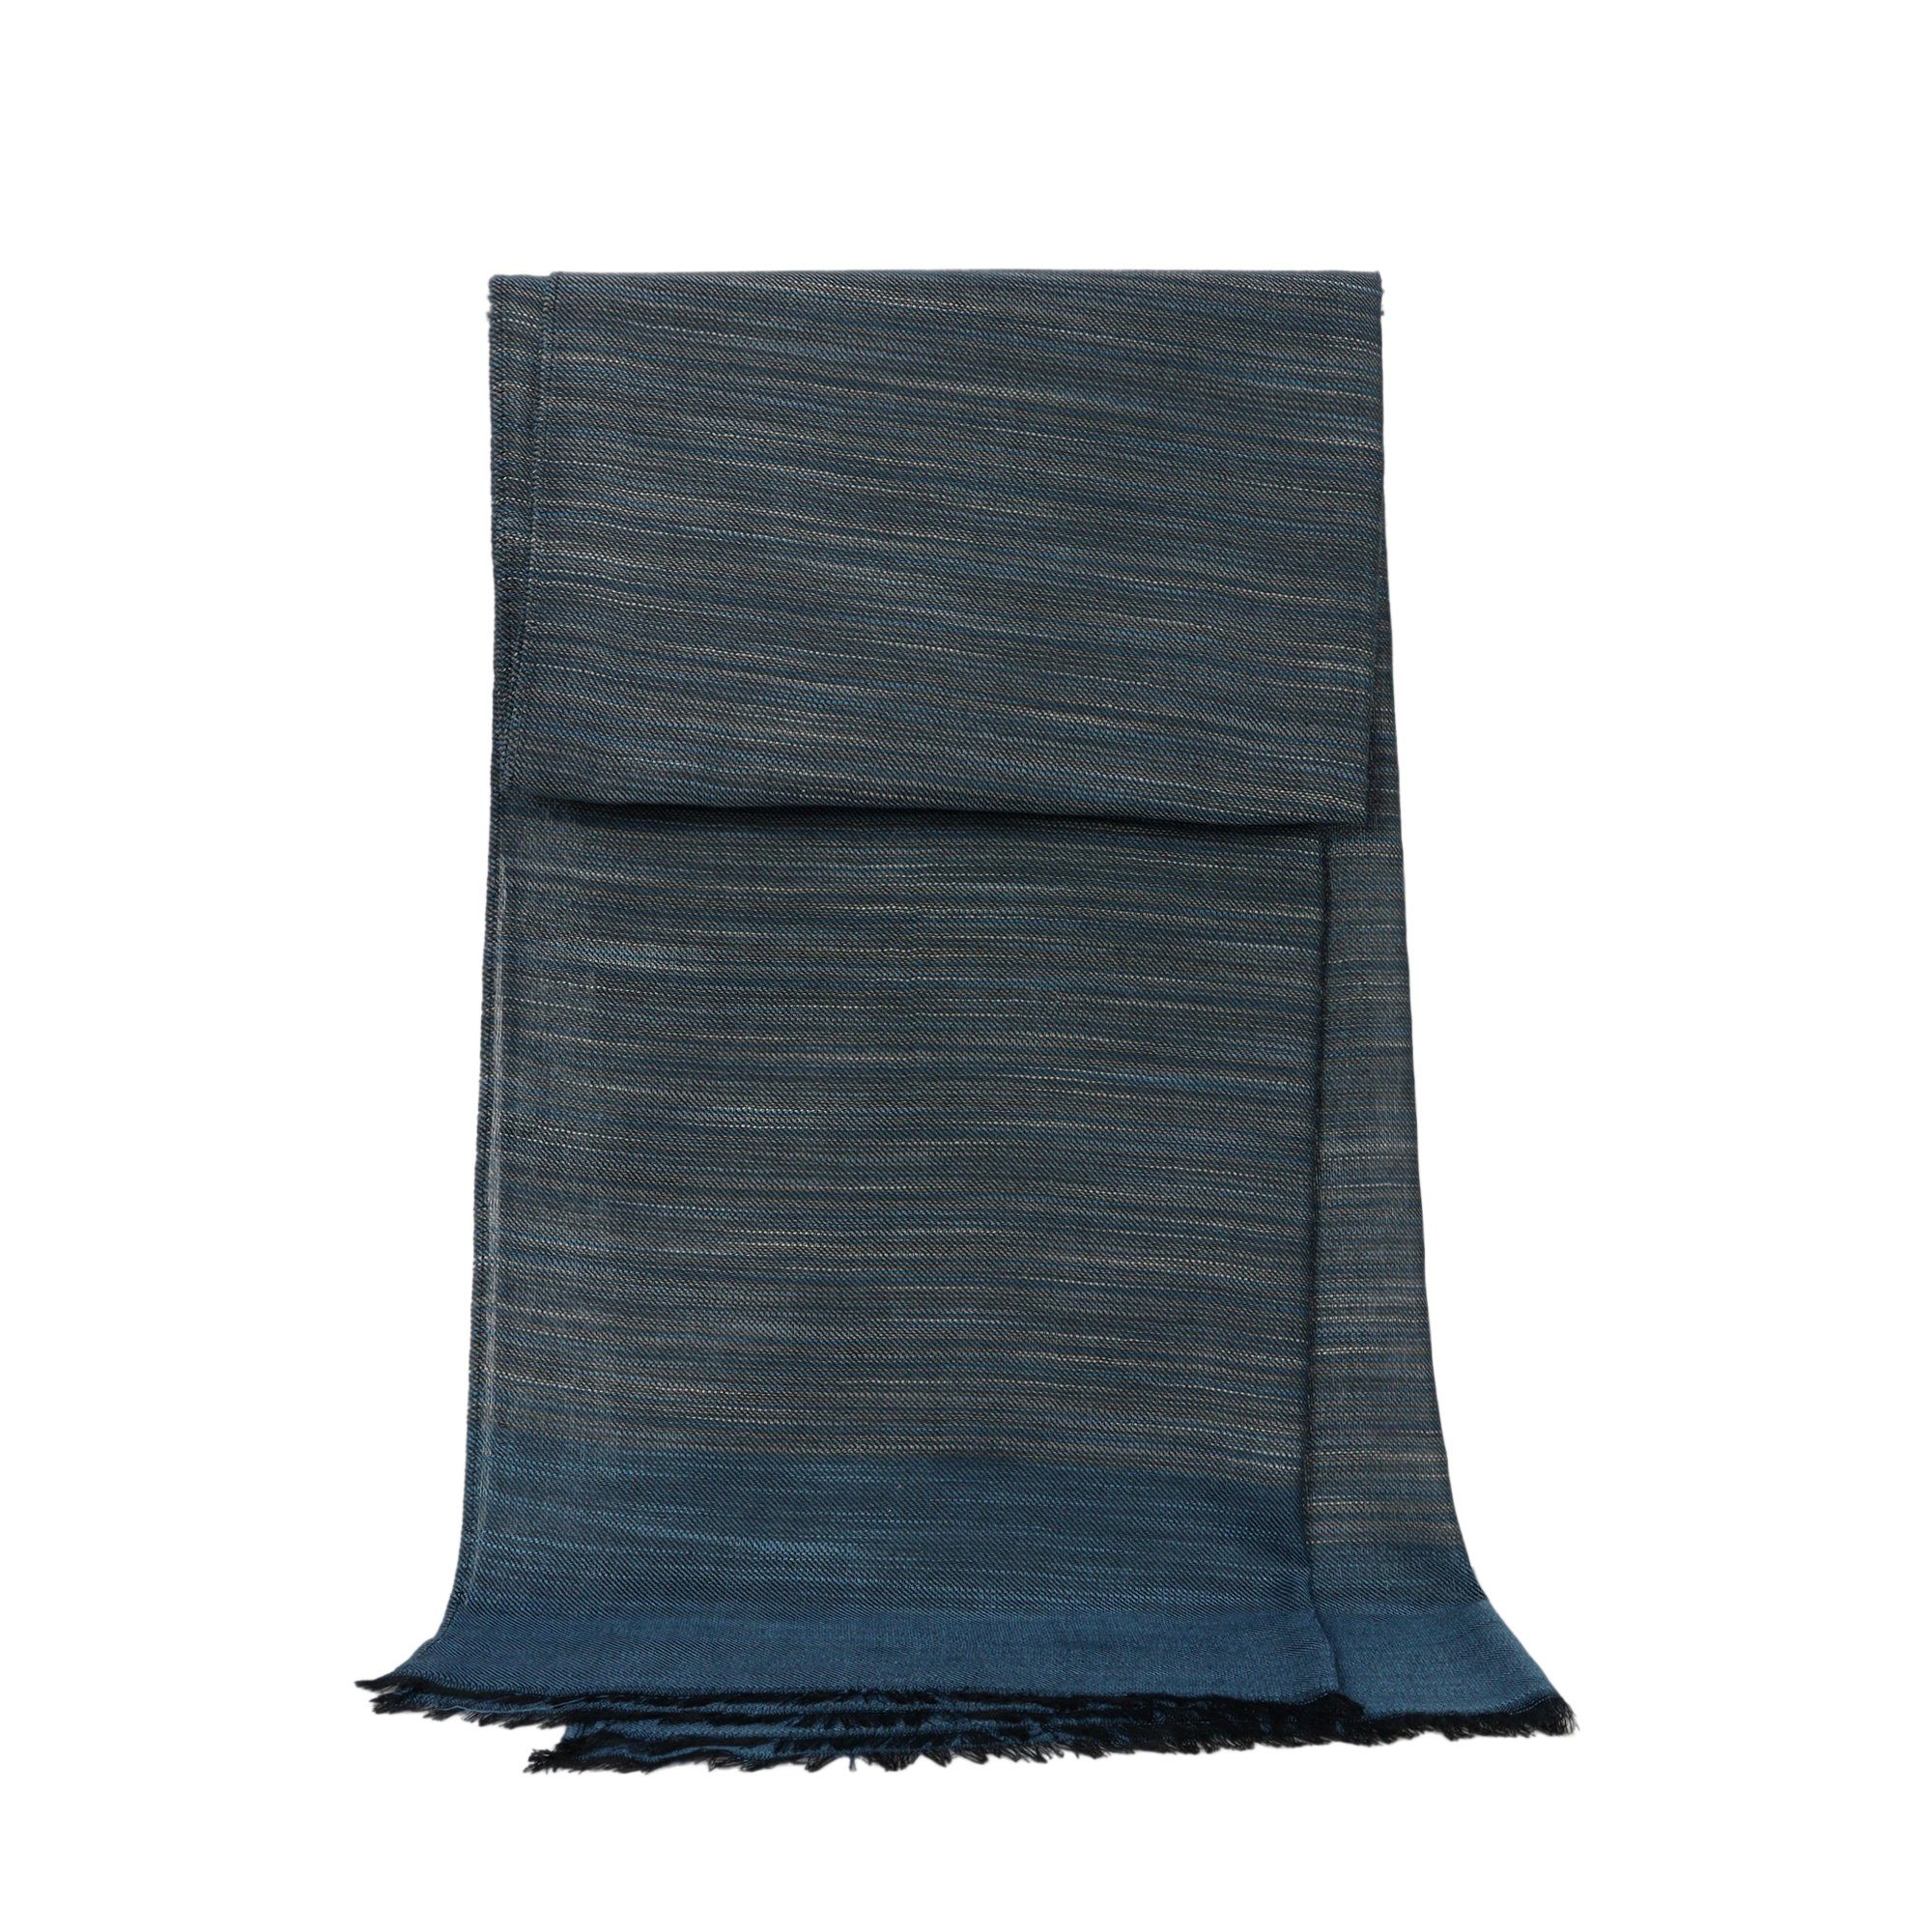 ZEBRO blau Modeschal Schal